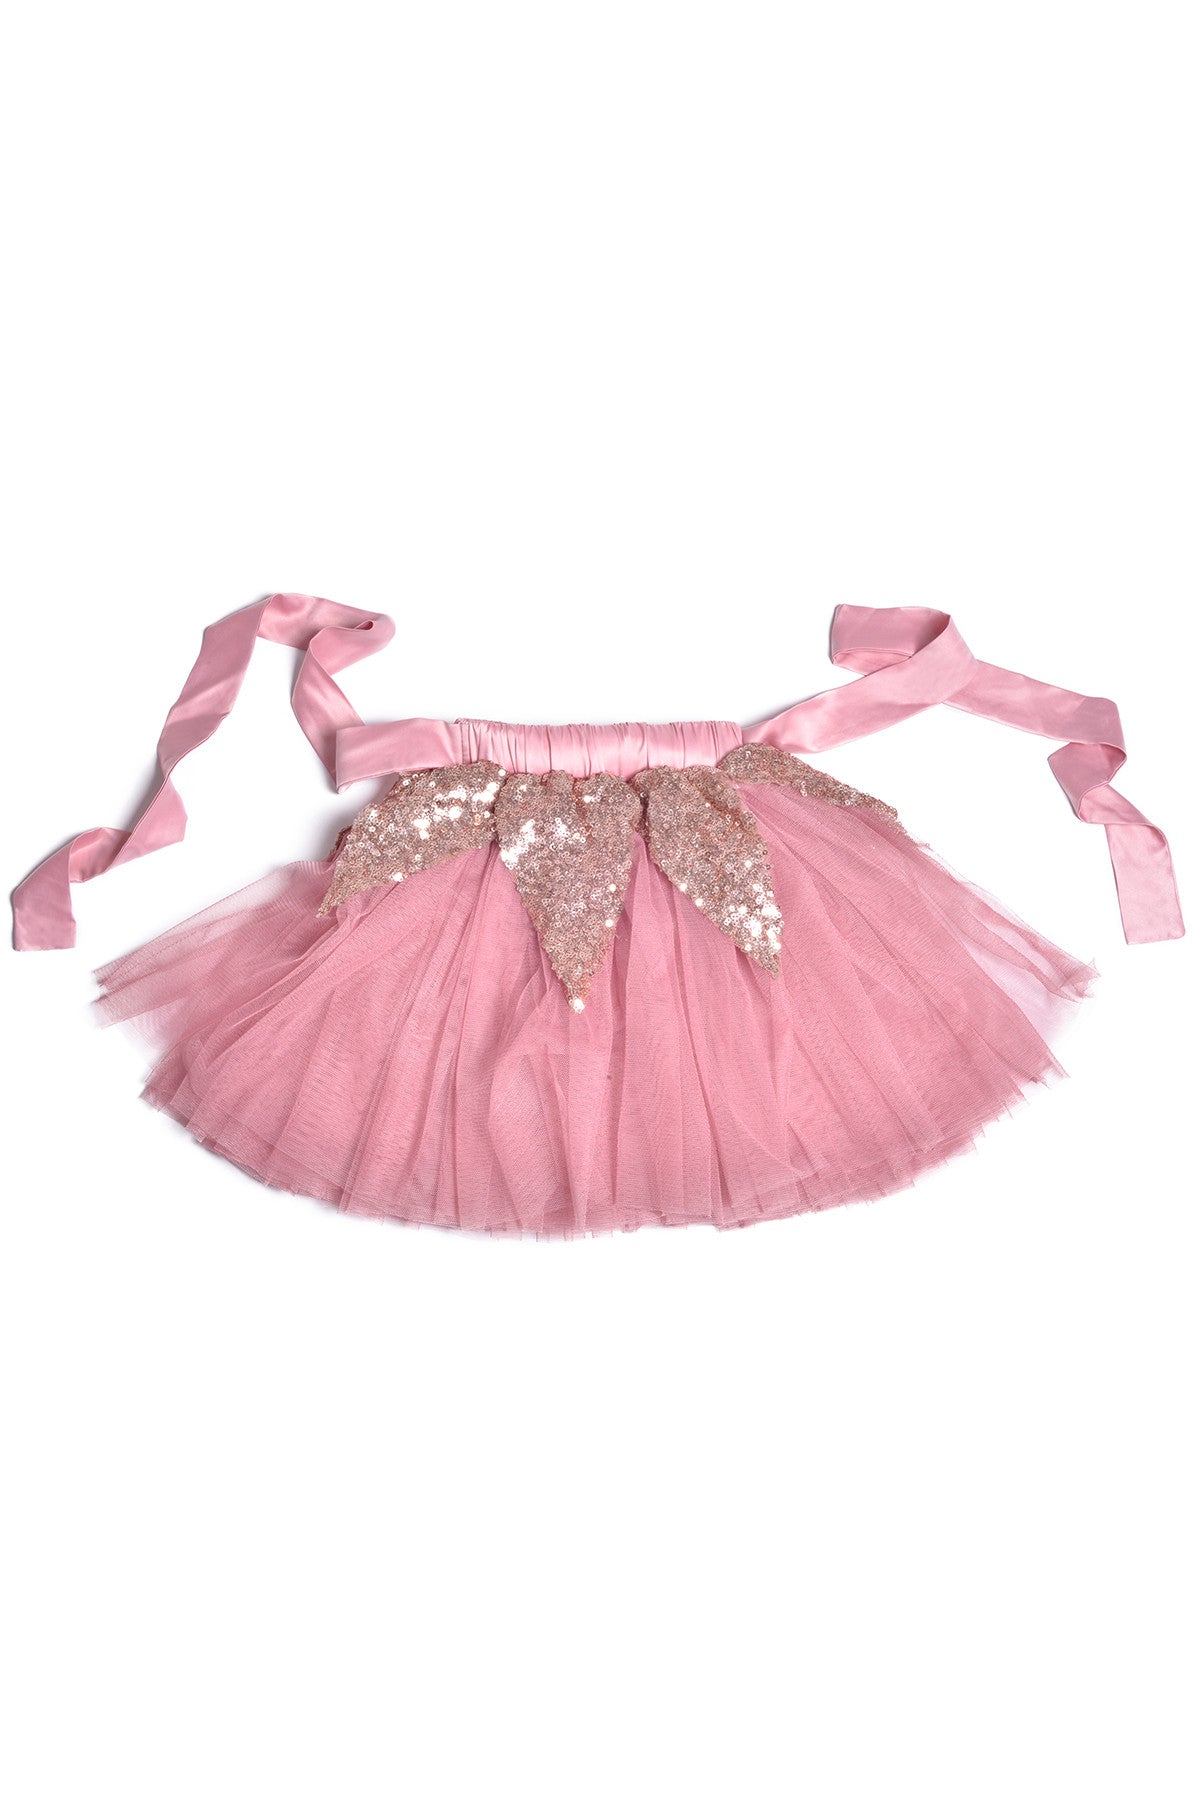 SEQUIN tutu skirt . pink and cream